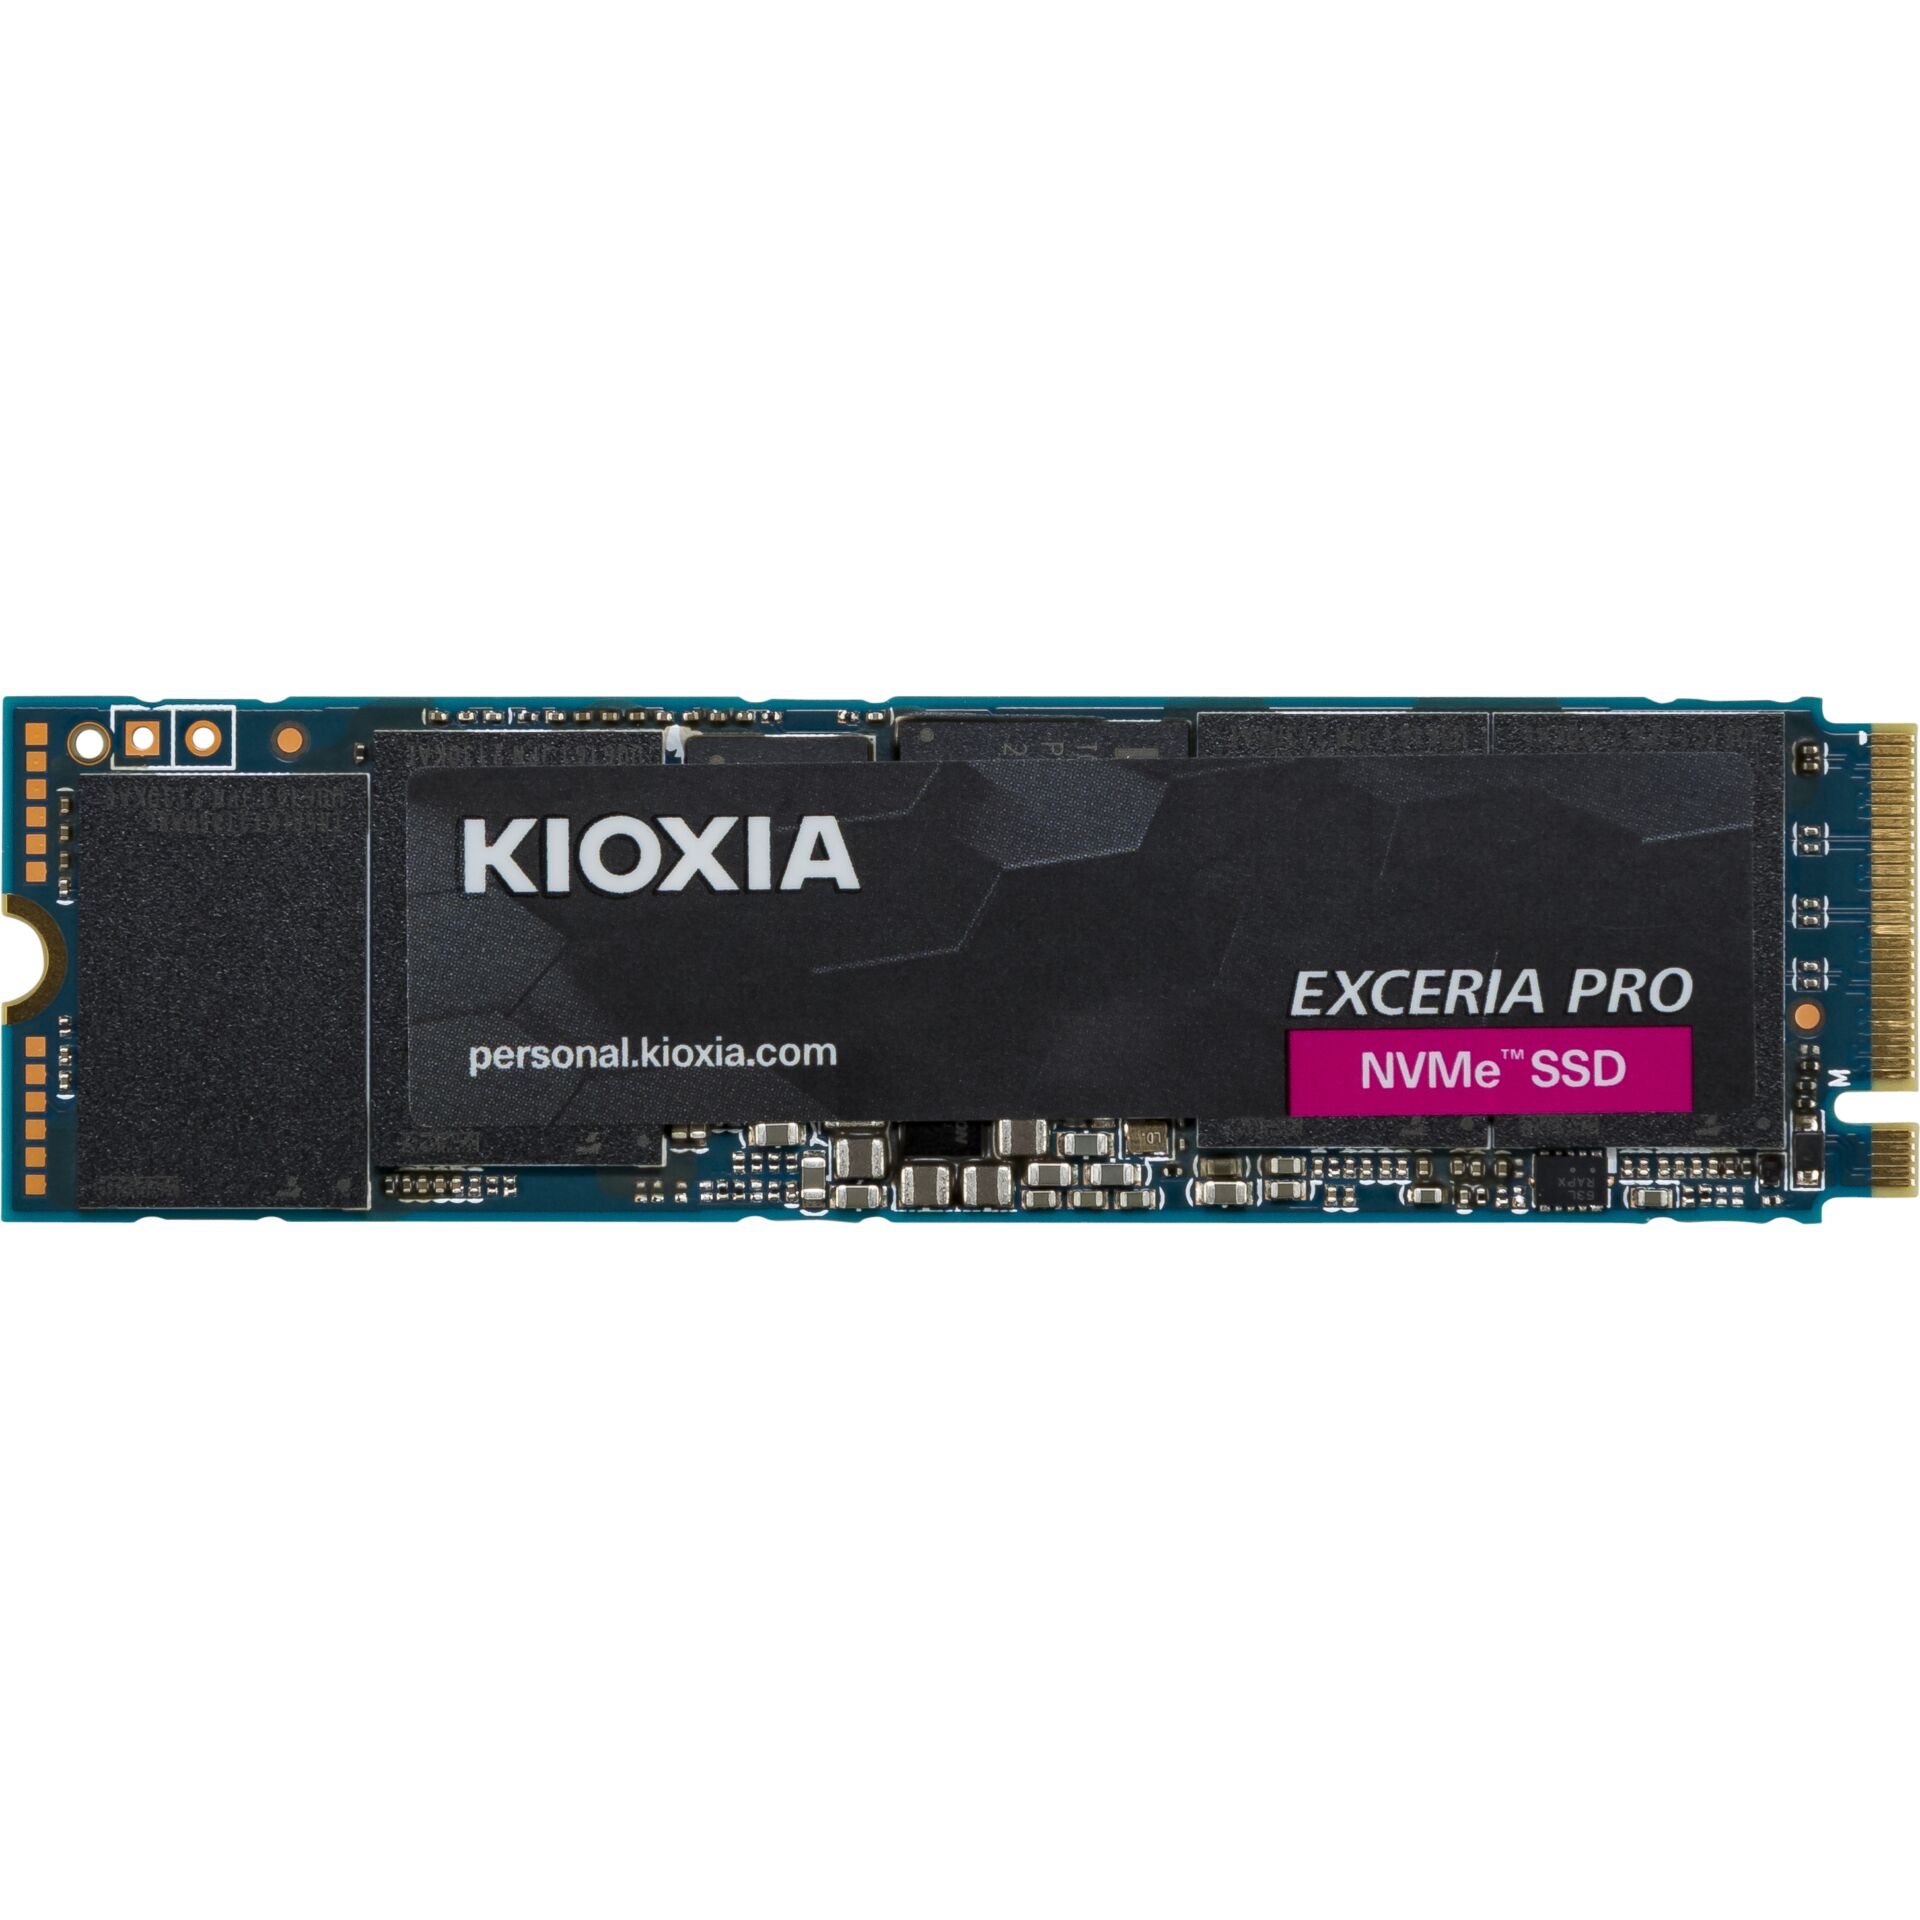 KIOXIA EXCERIA PRO 1TB m.2 NVMe 2280 PCIe 3.0 Gen4